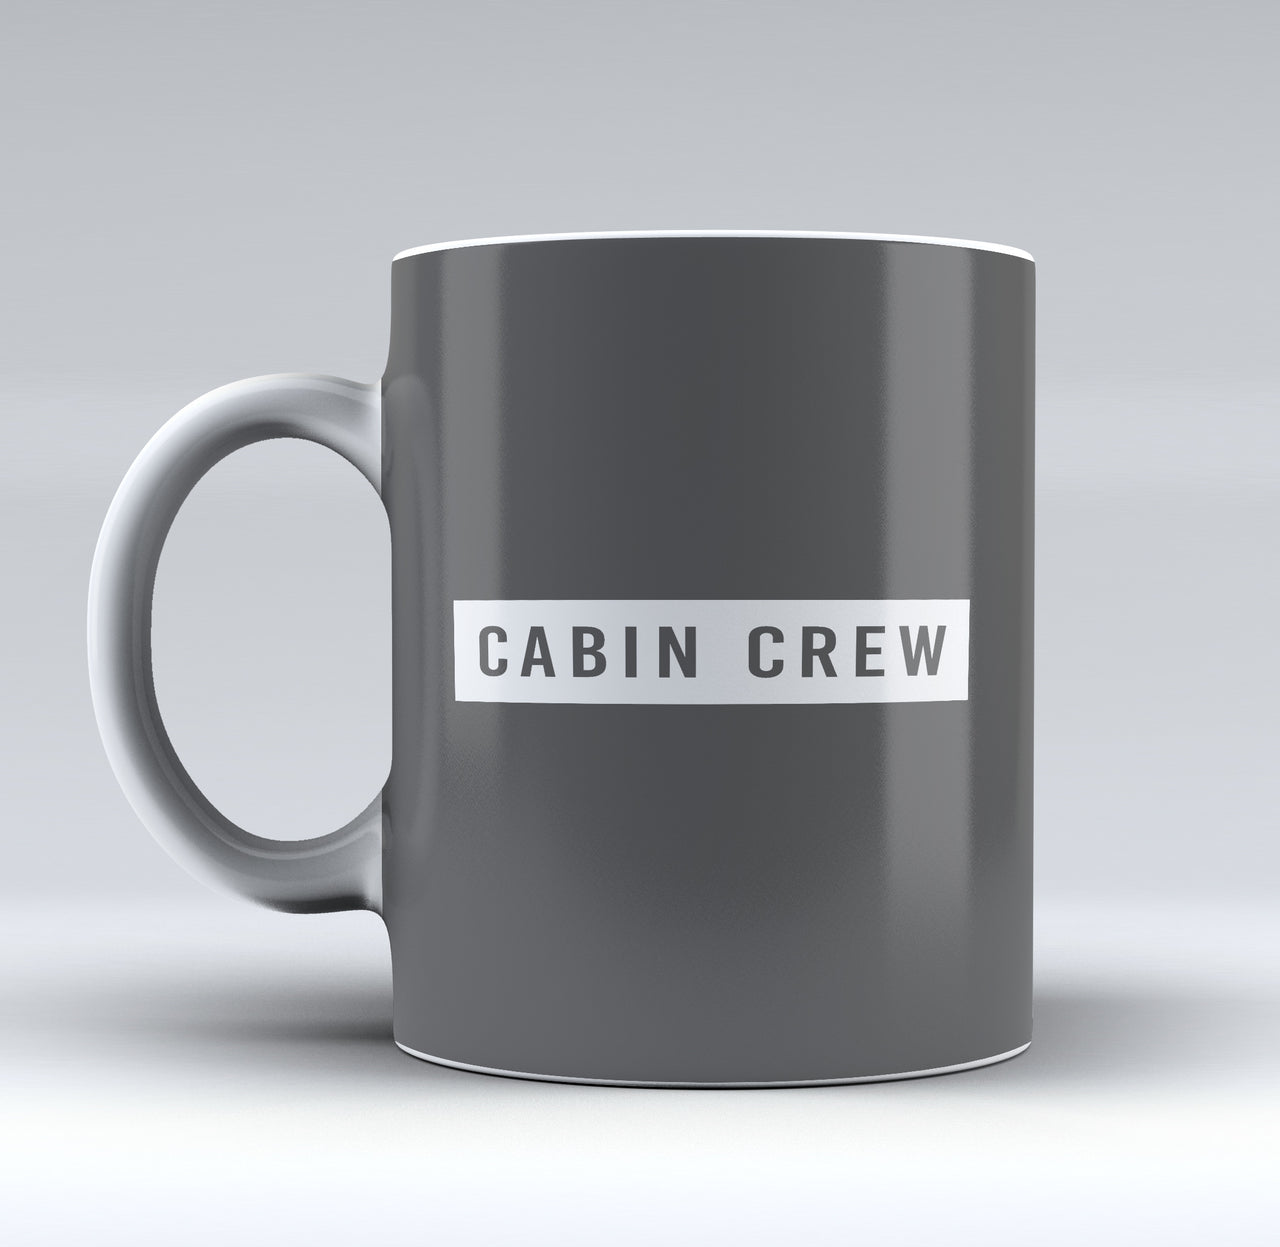 Cabin Crew Text Designed Mugs